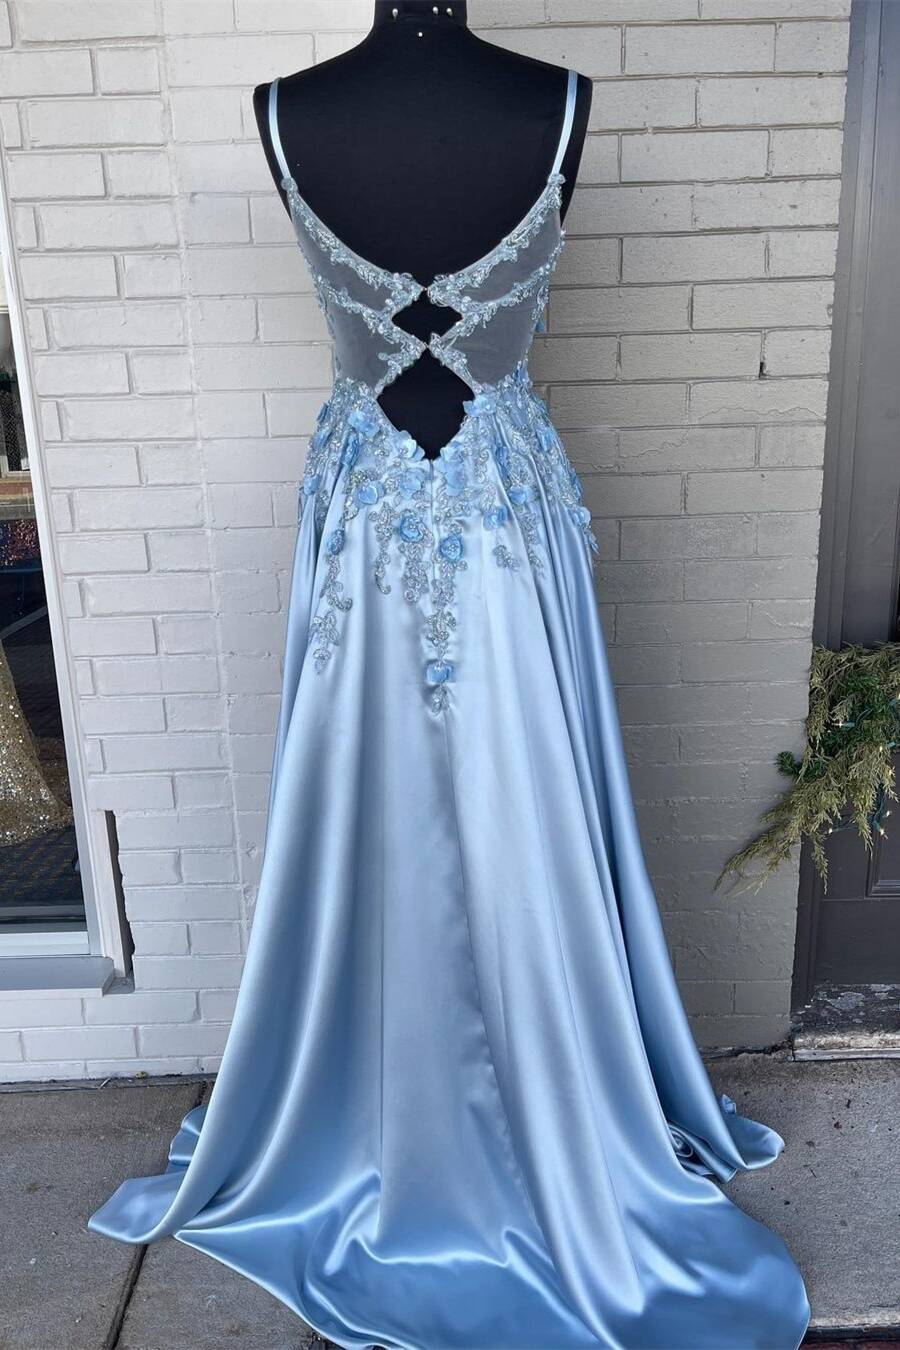 Light Blue A-line 3D Flowers Satin Long Prom Dress nv295